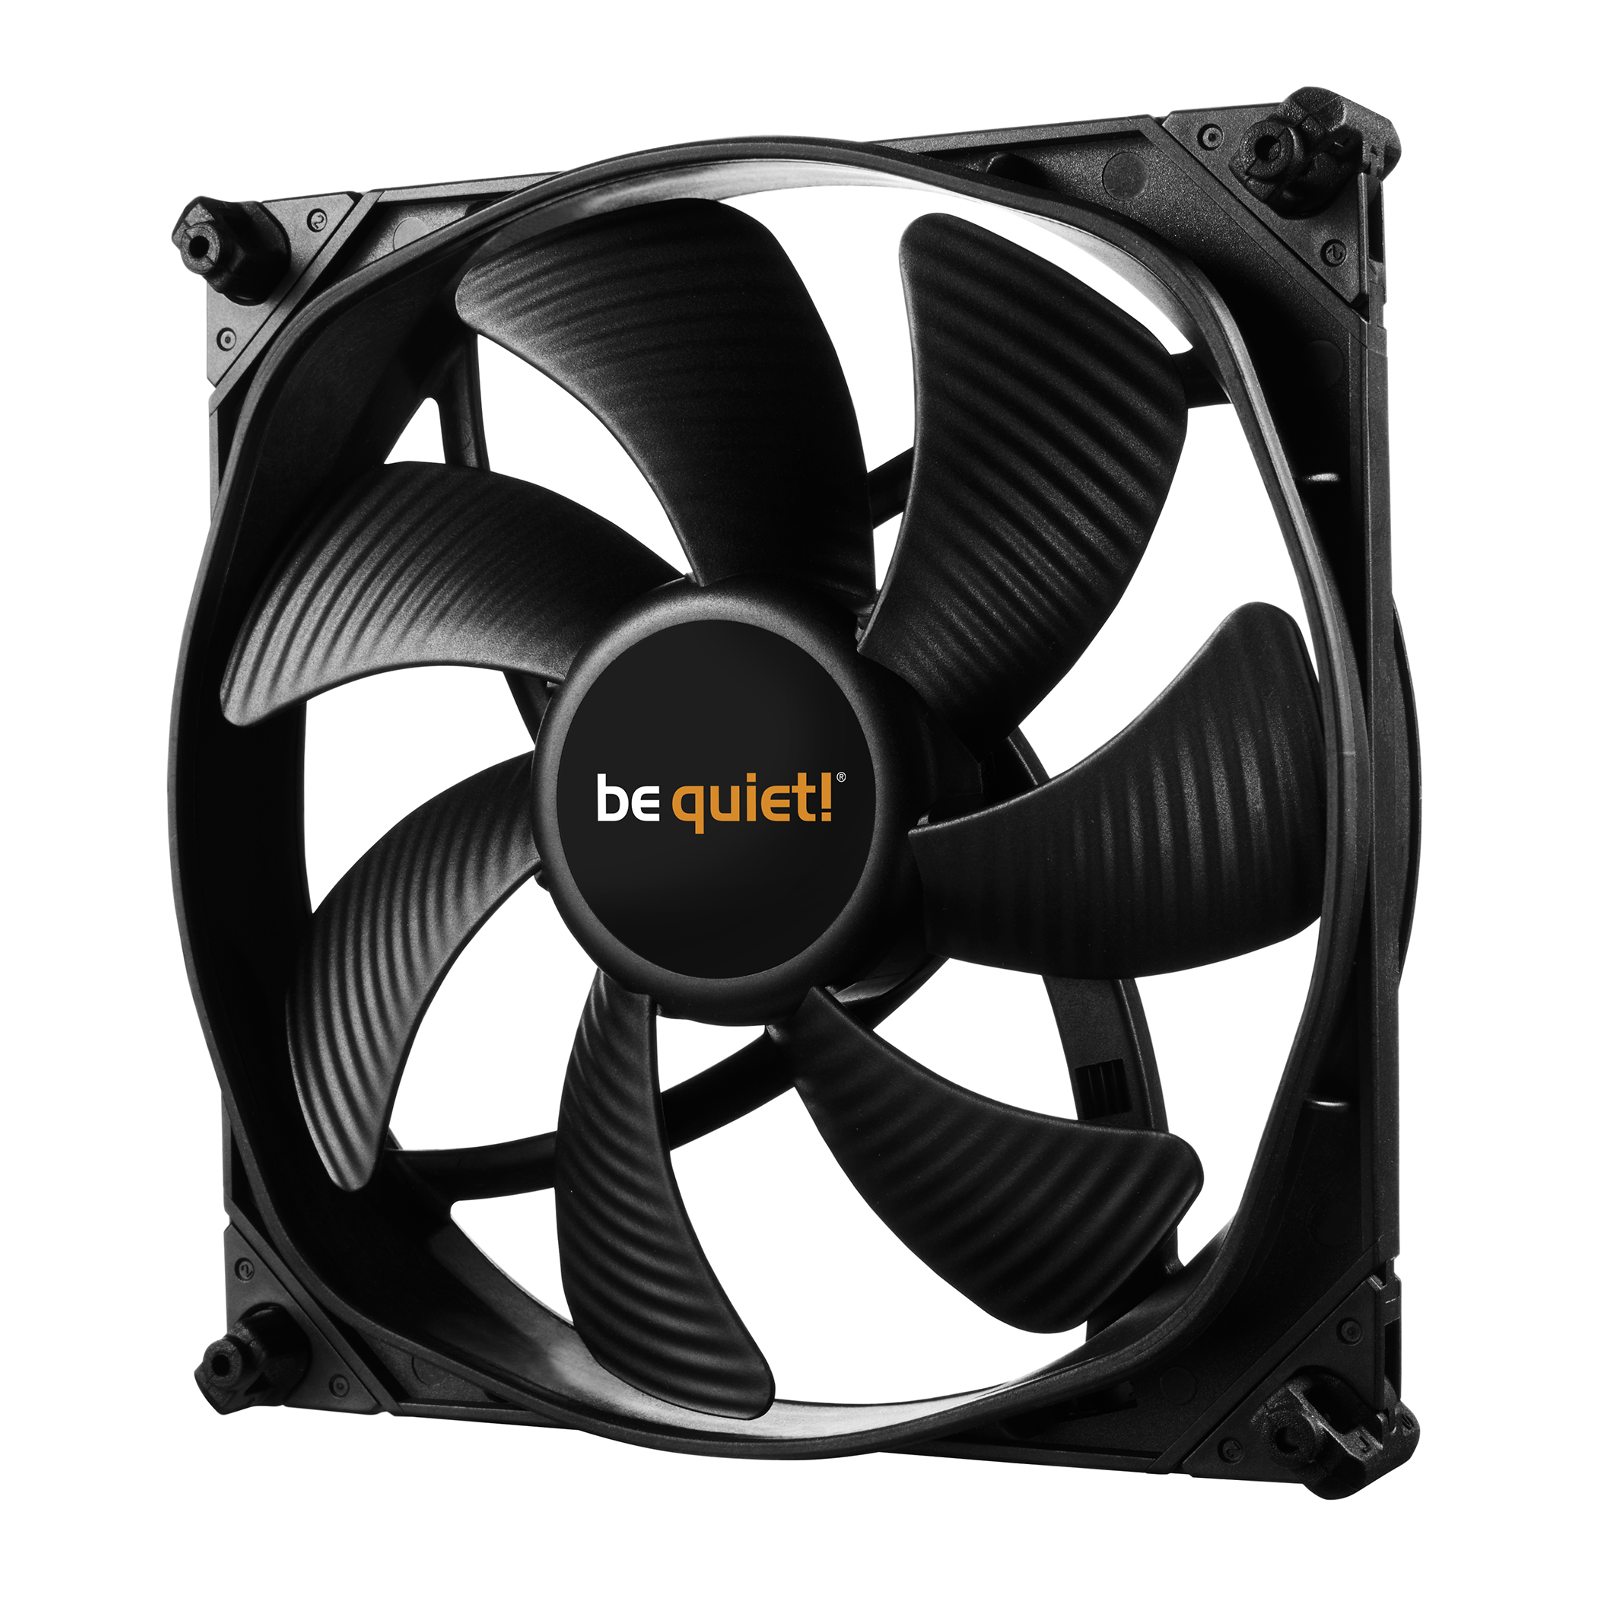 be quiet! - be quiet! Silent Wings 3 140mm PWM Fan